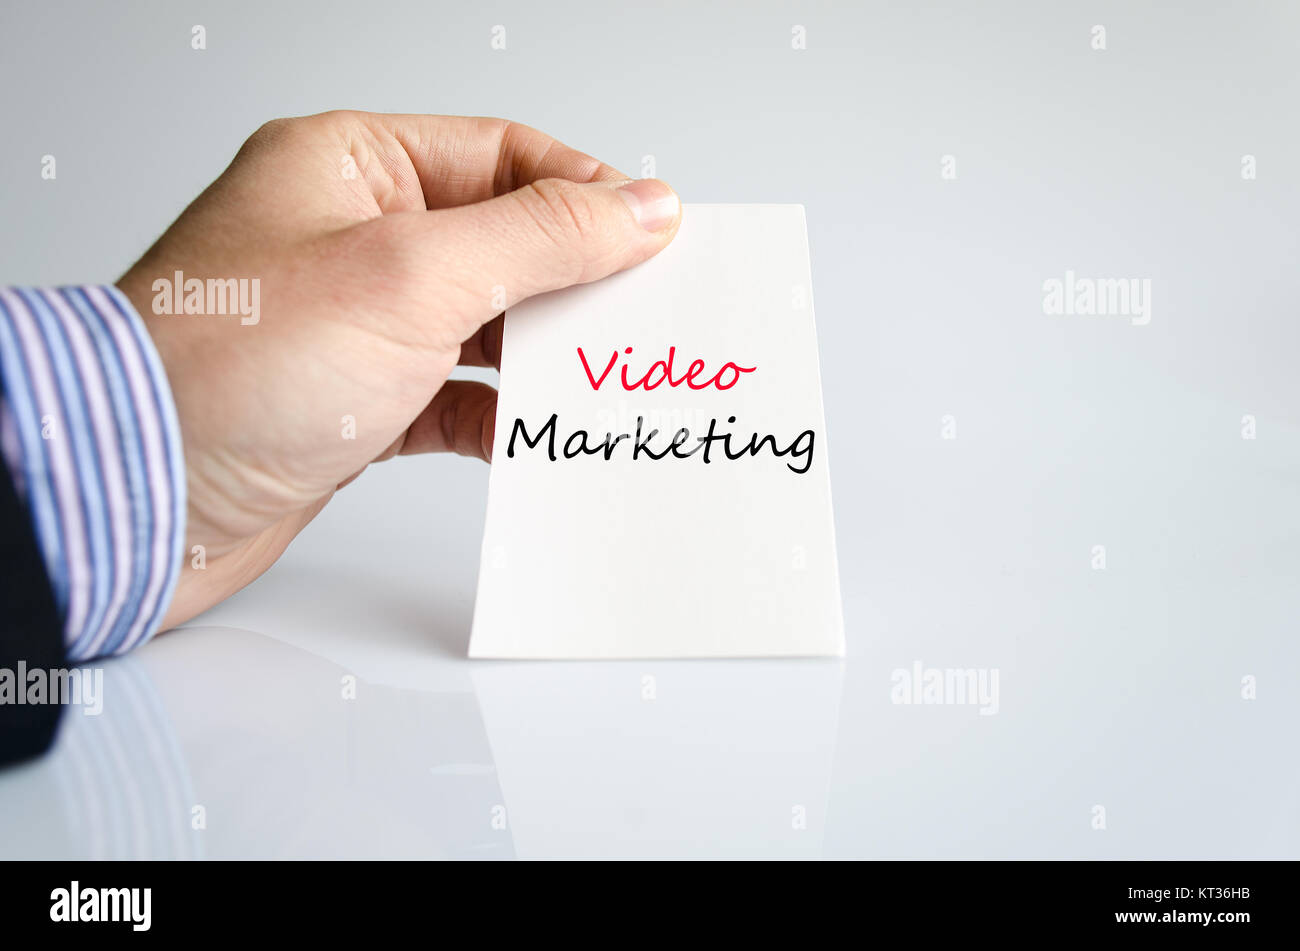 Video marketing text concept Stock Photo